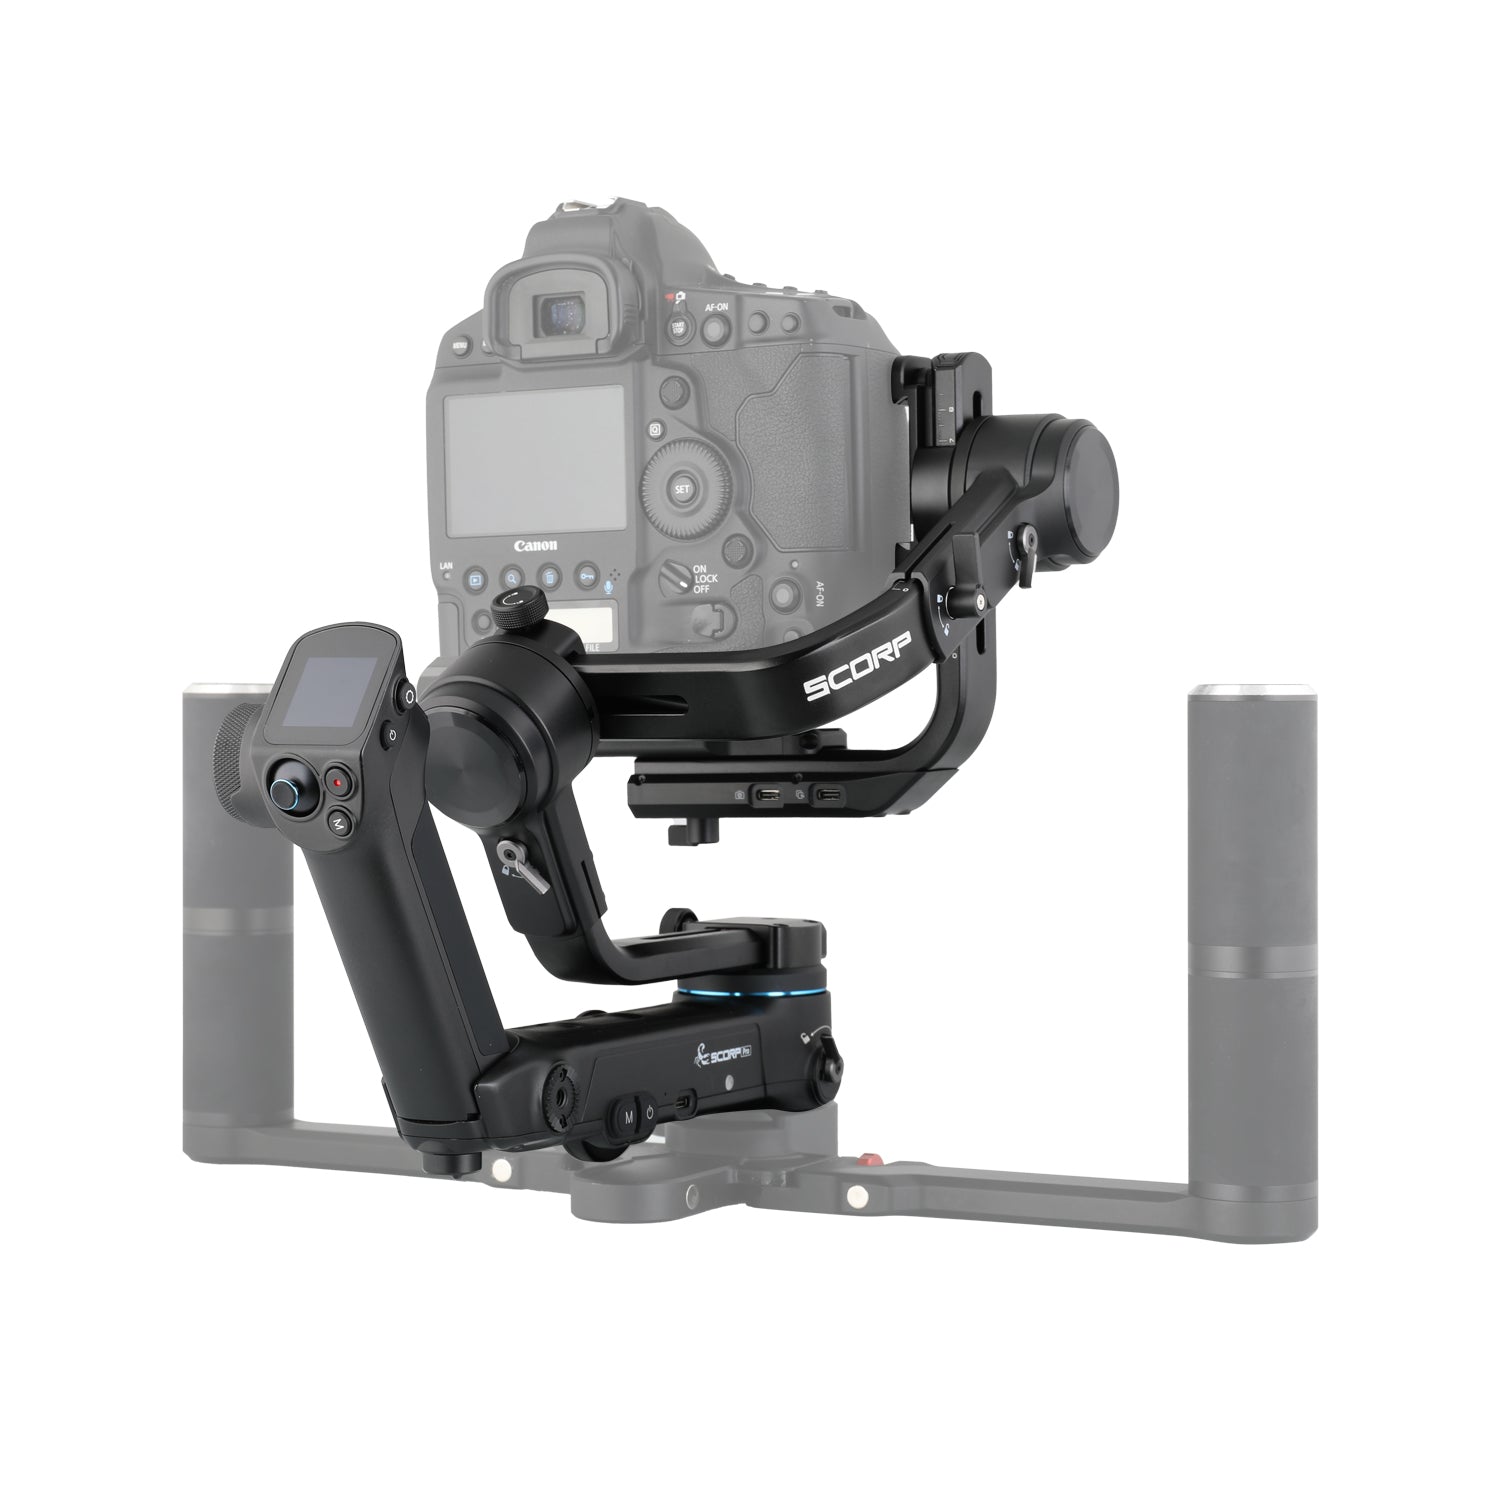 (überholt) SCORP Pro Abnehmbarer 3-Achsen-Profi-Gimbal-Stabilisator für spiegellose DSLR-Kamera